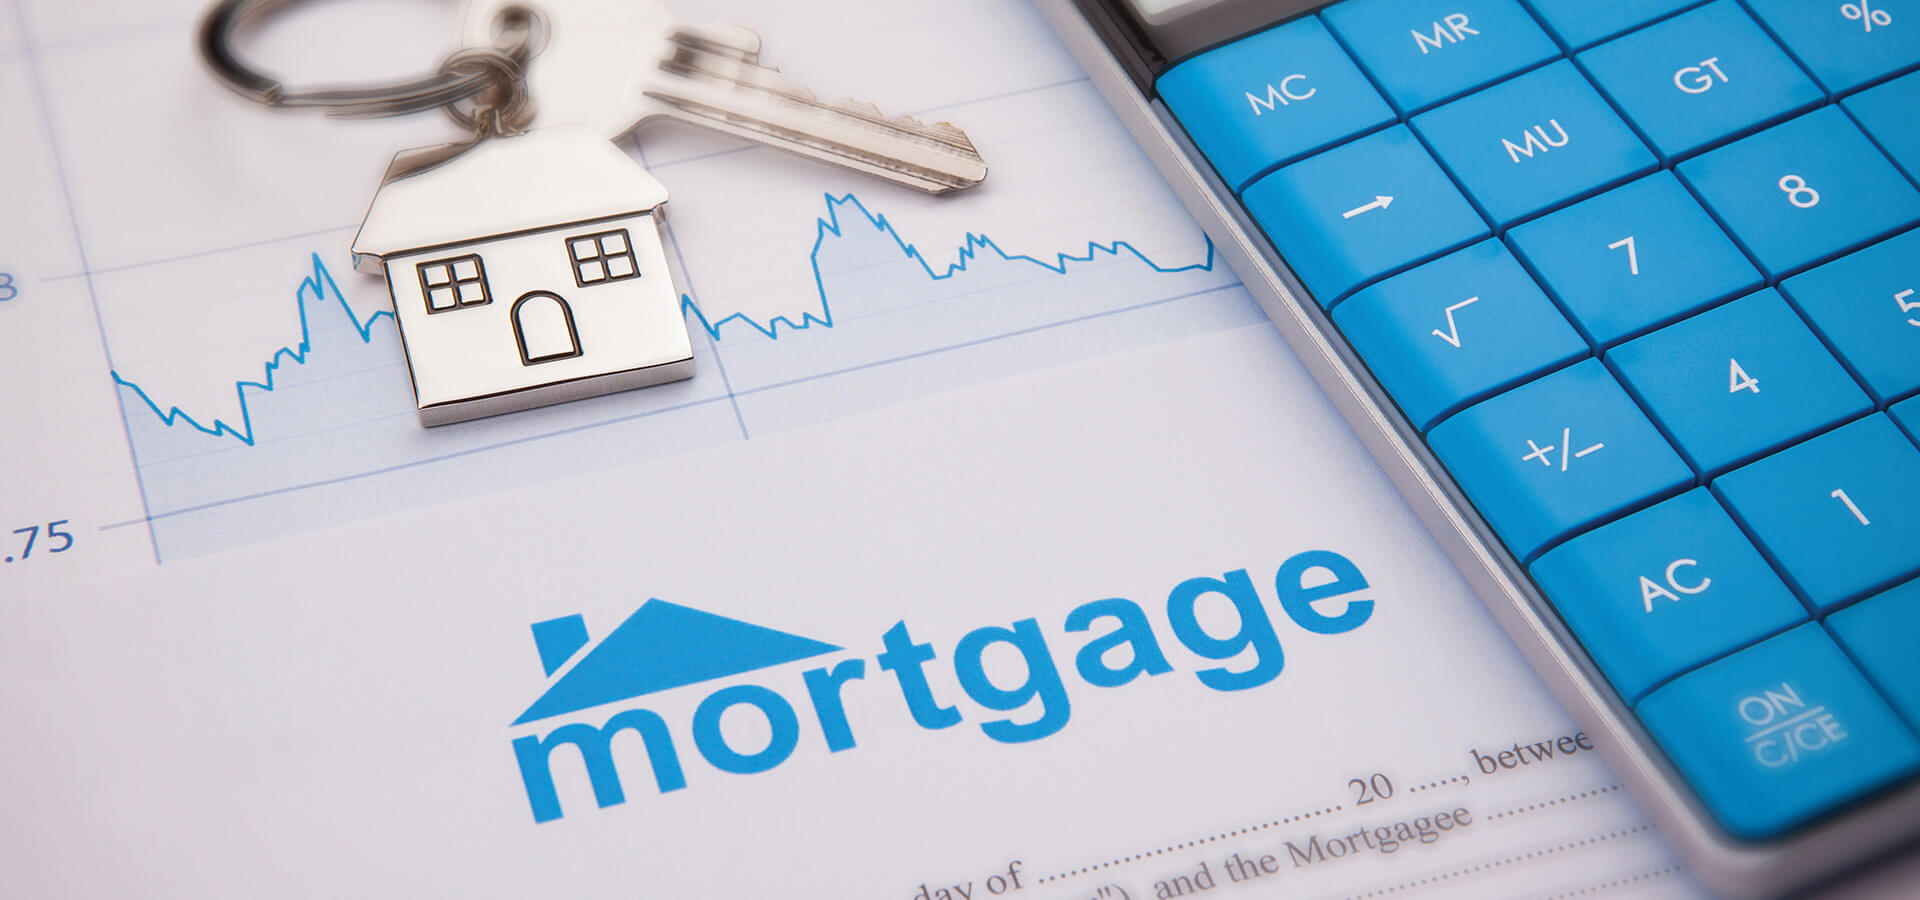 Mortgage financing